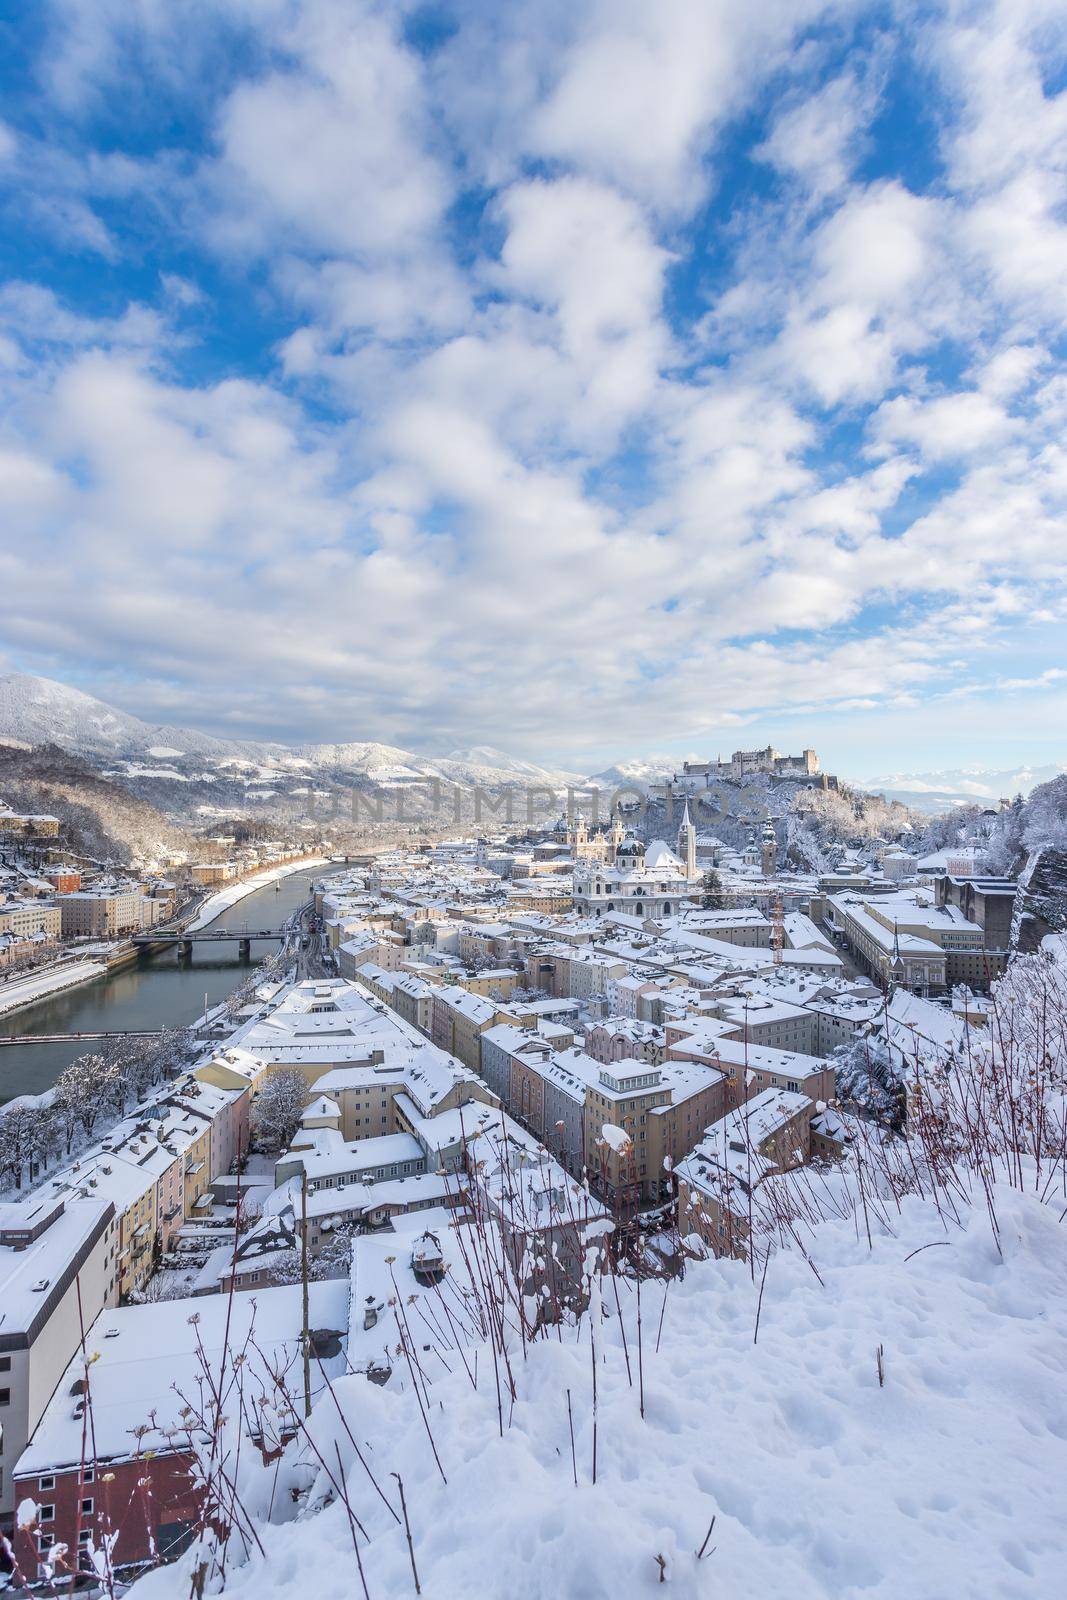 Panorama of Salzburg in winter: Snowy historical center, sunshine by Daxenbichler